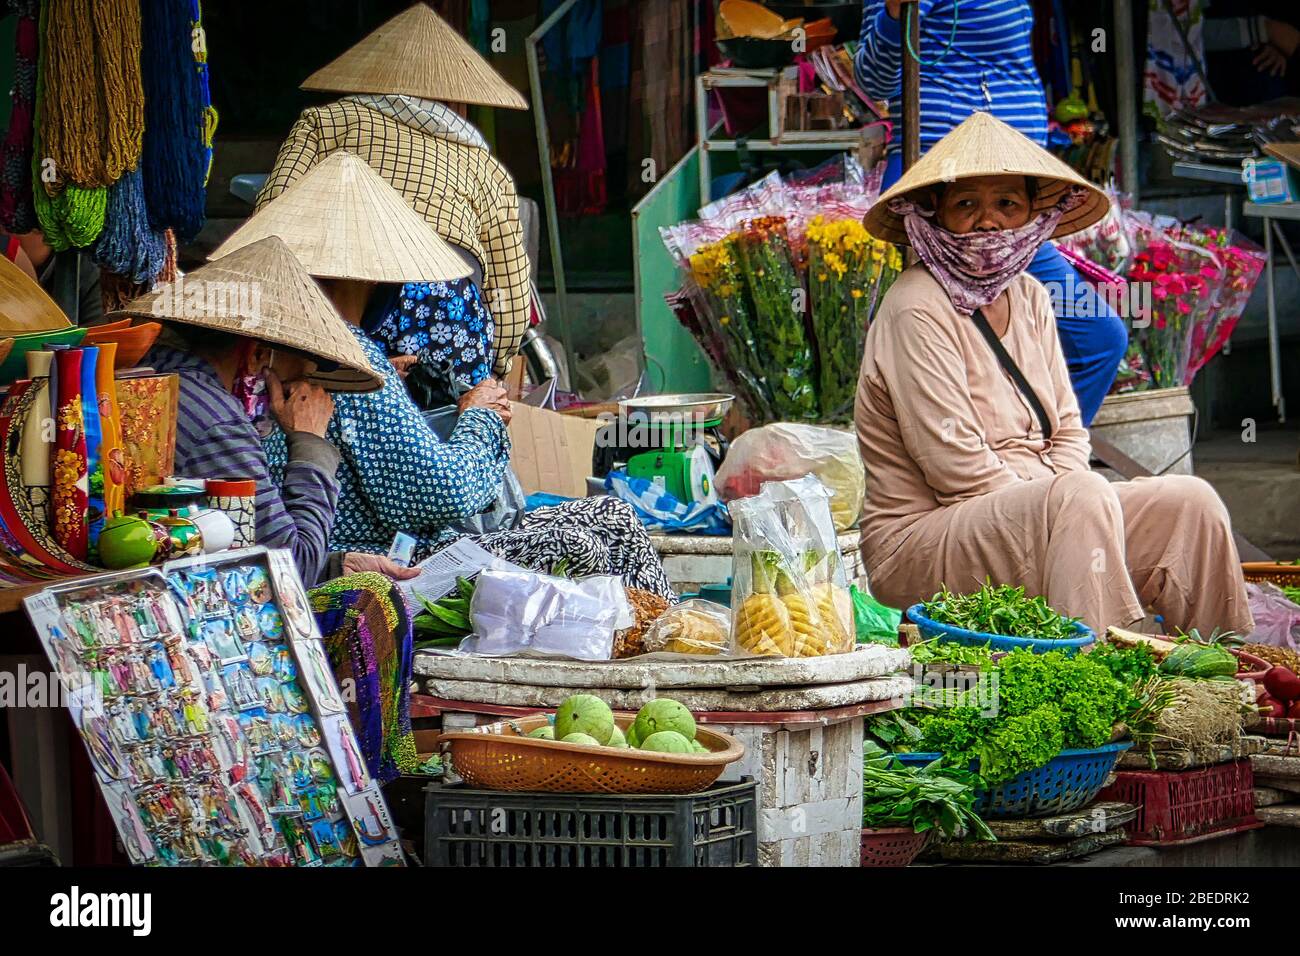 Street Market Staall, Comment Ann, Vietnam Banque D'Images